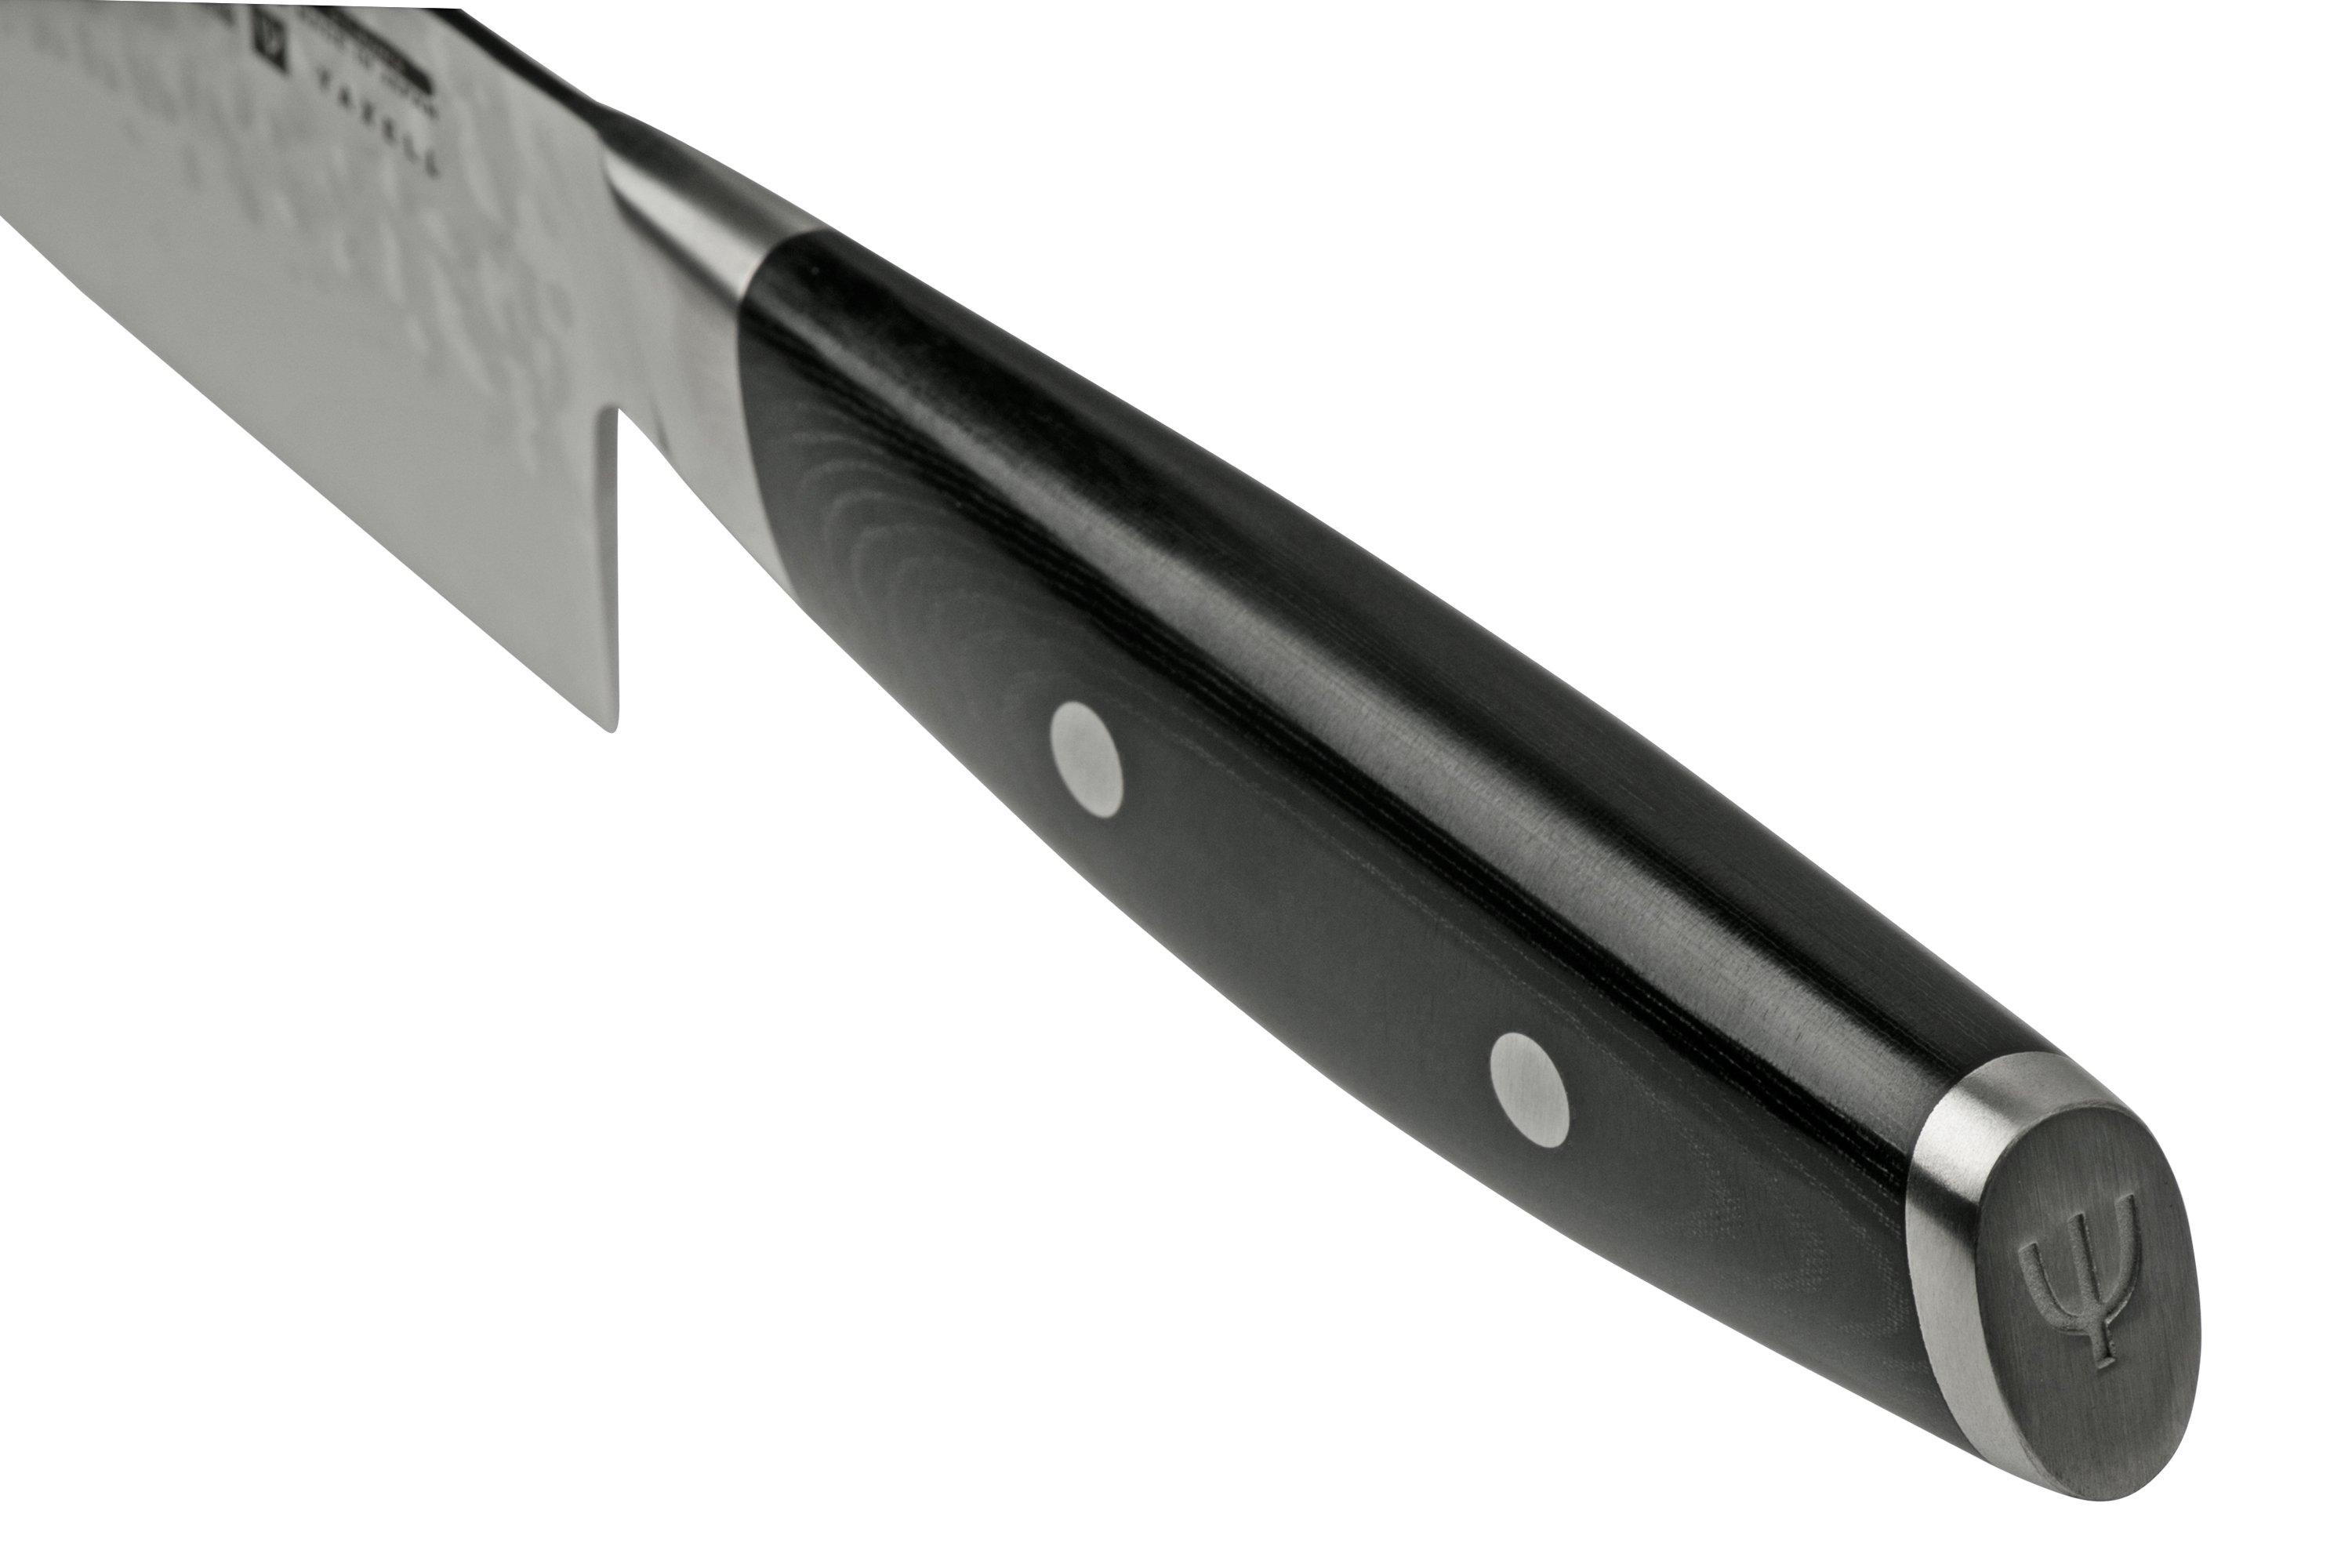 Yaxell Tsuchimon 36700 knife 20 cm | Advantageously shopping at